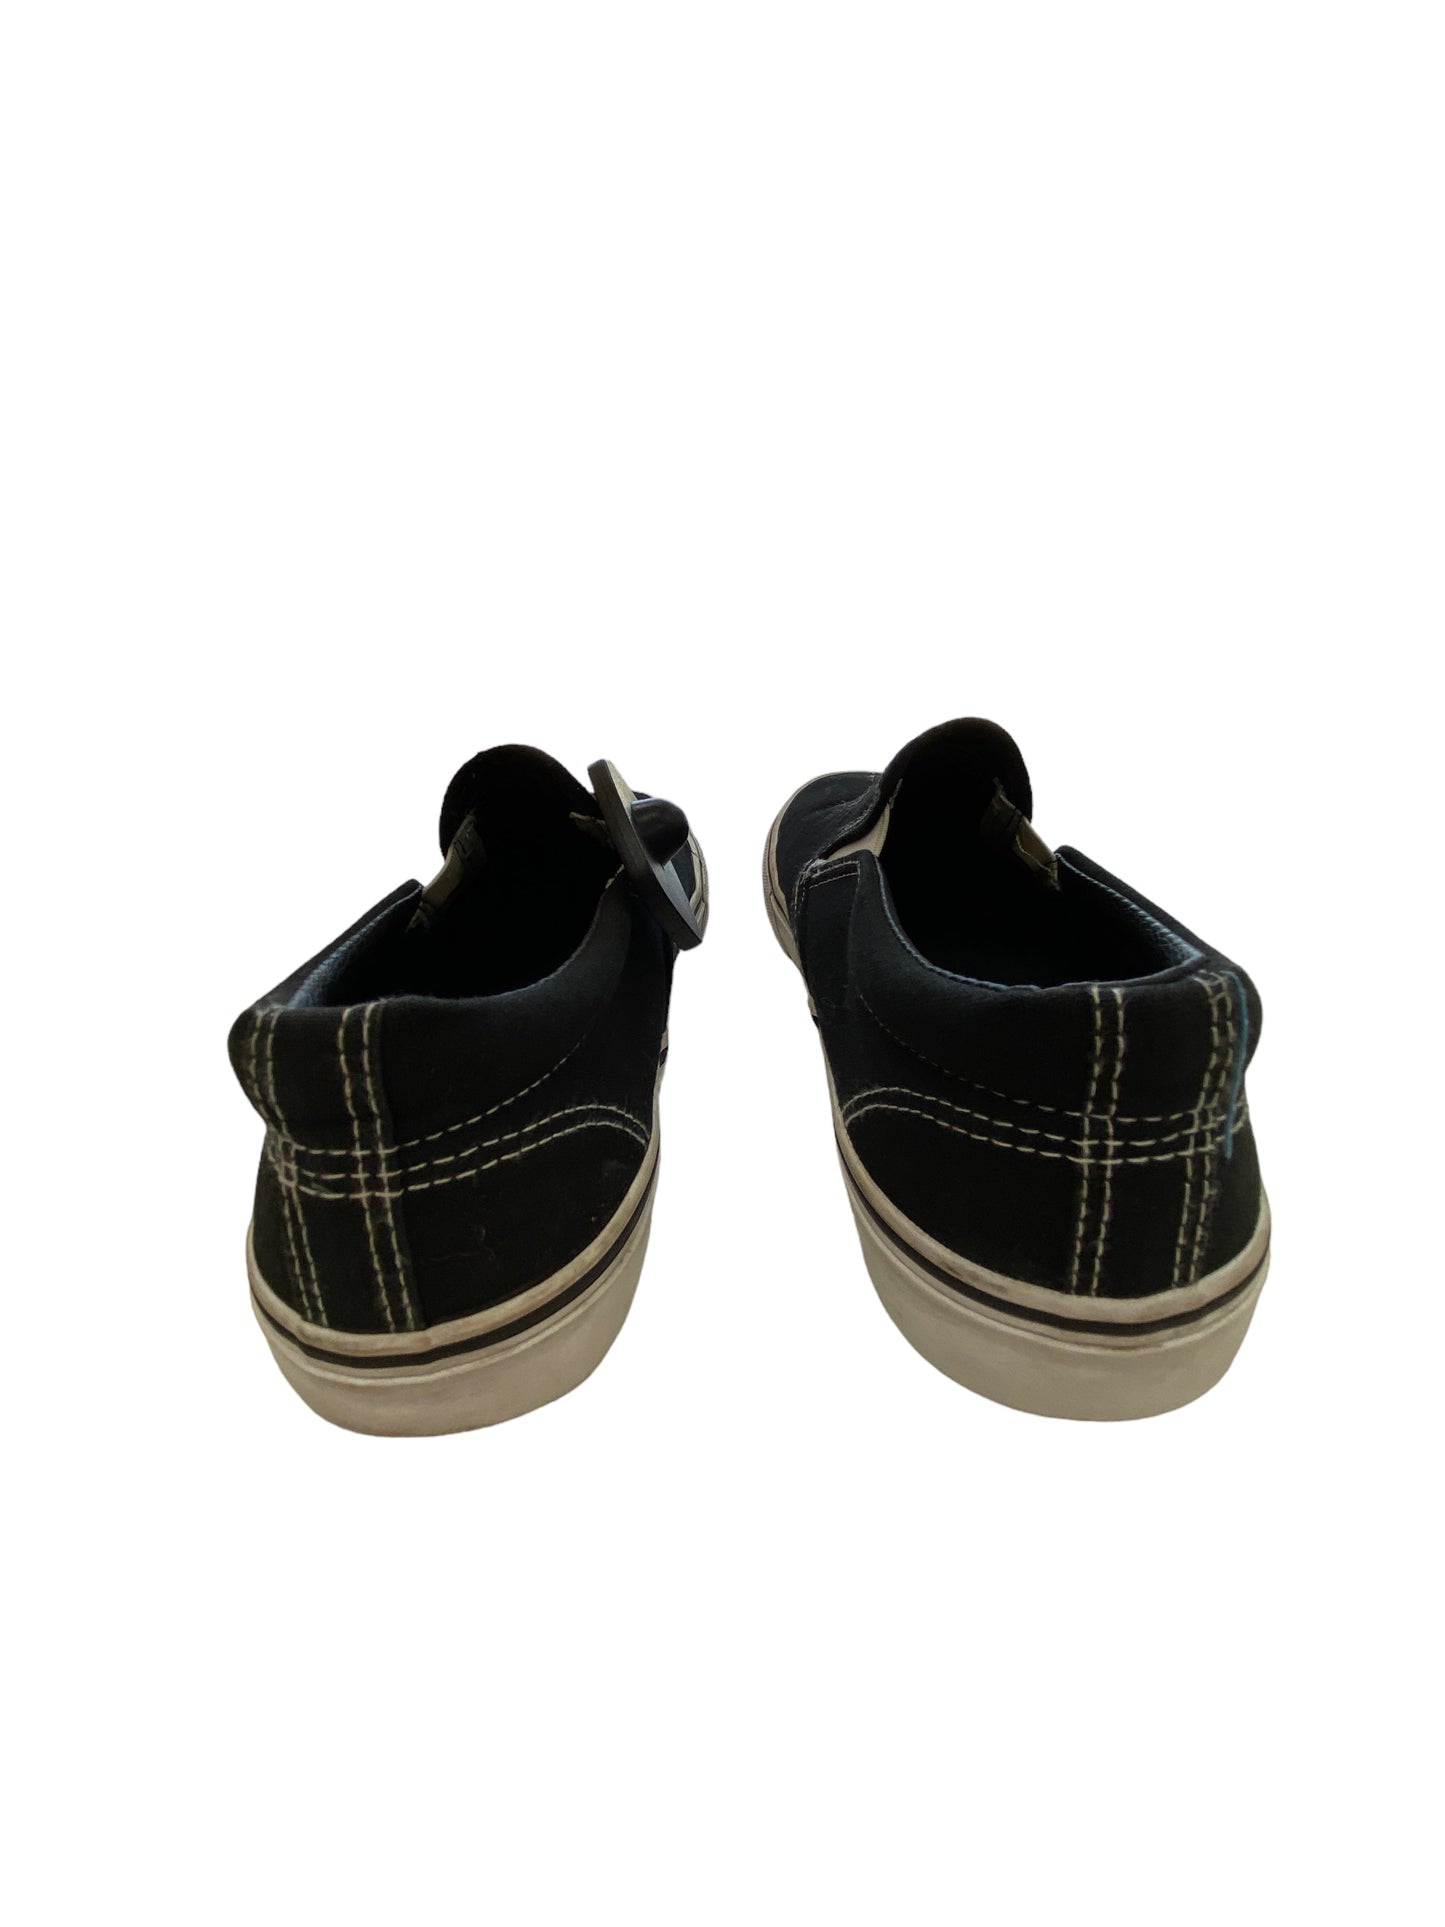 Black & White Shoes Flats No Boundaries, Size 8.5